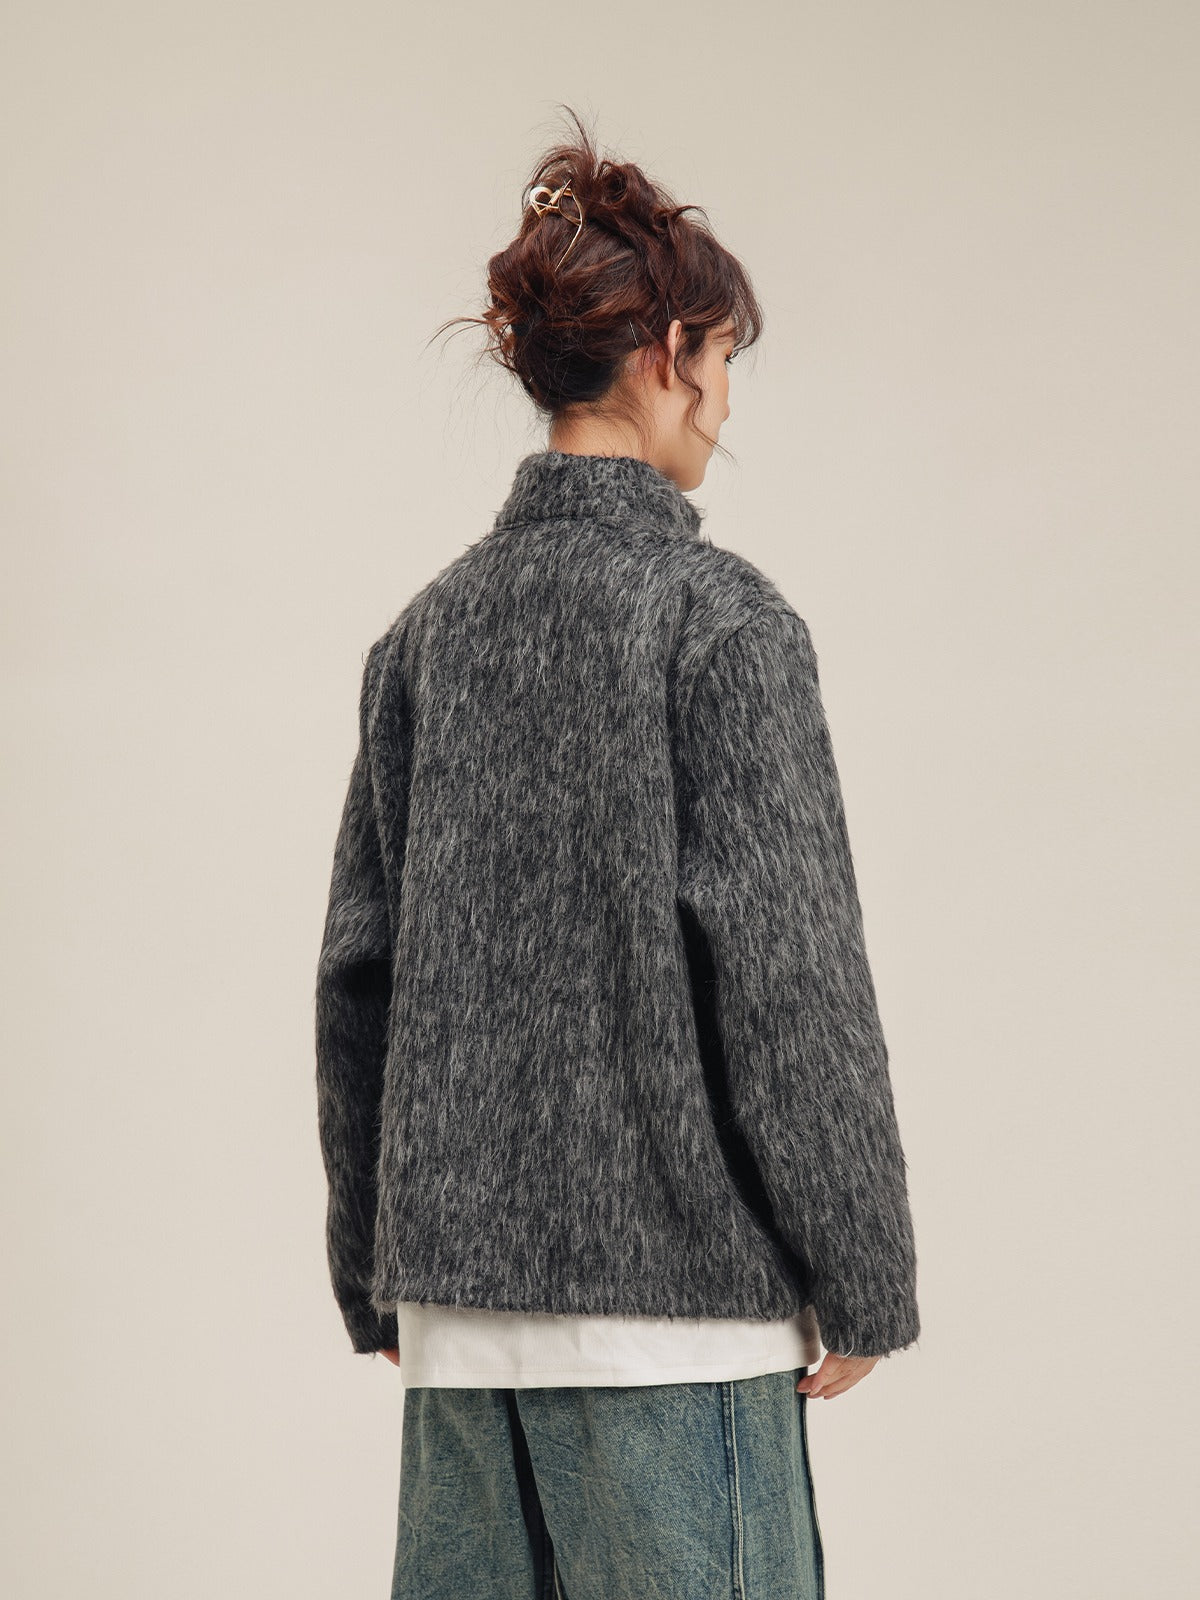 American Grey Sweater Cardigan Versatile Sweater Coat